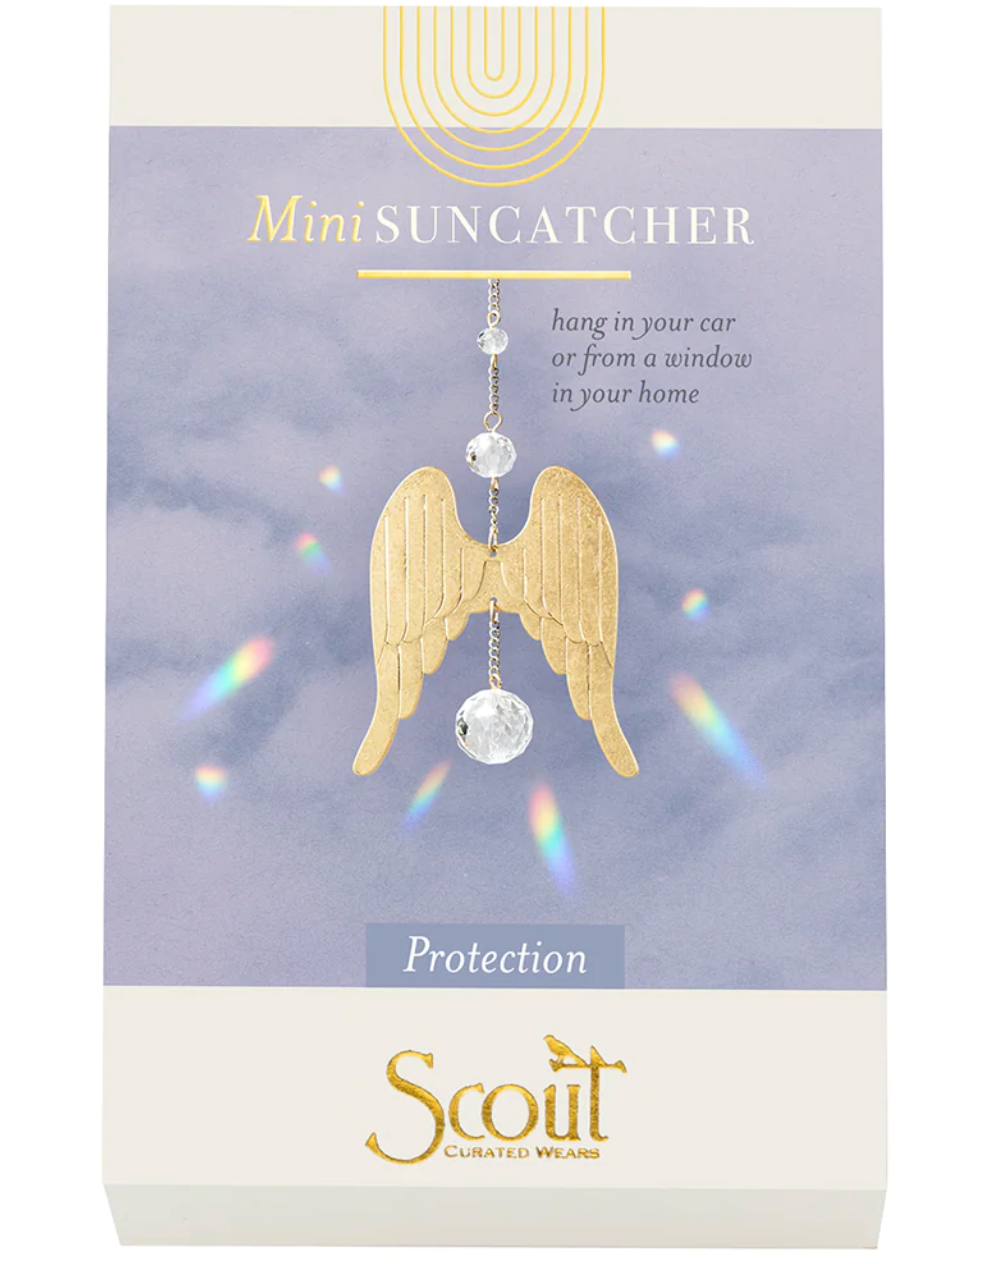 Mini Suncatcher - Wings/Protection